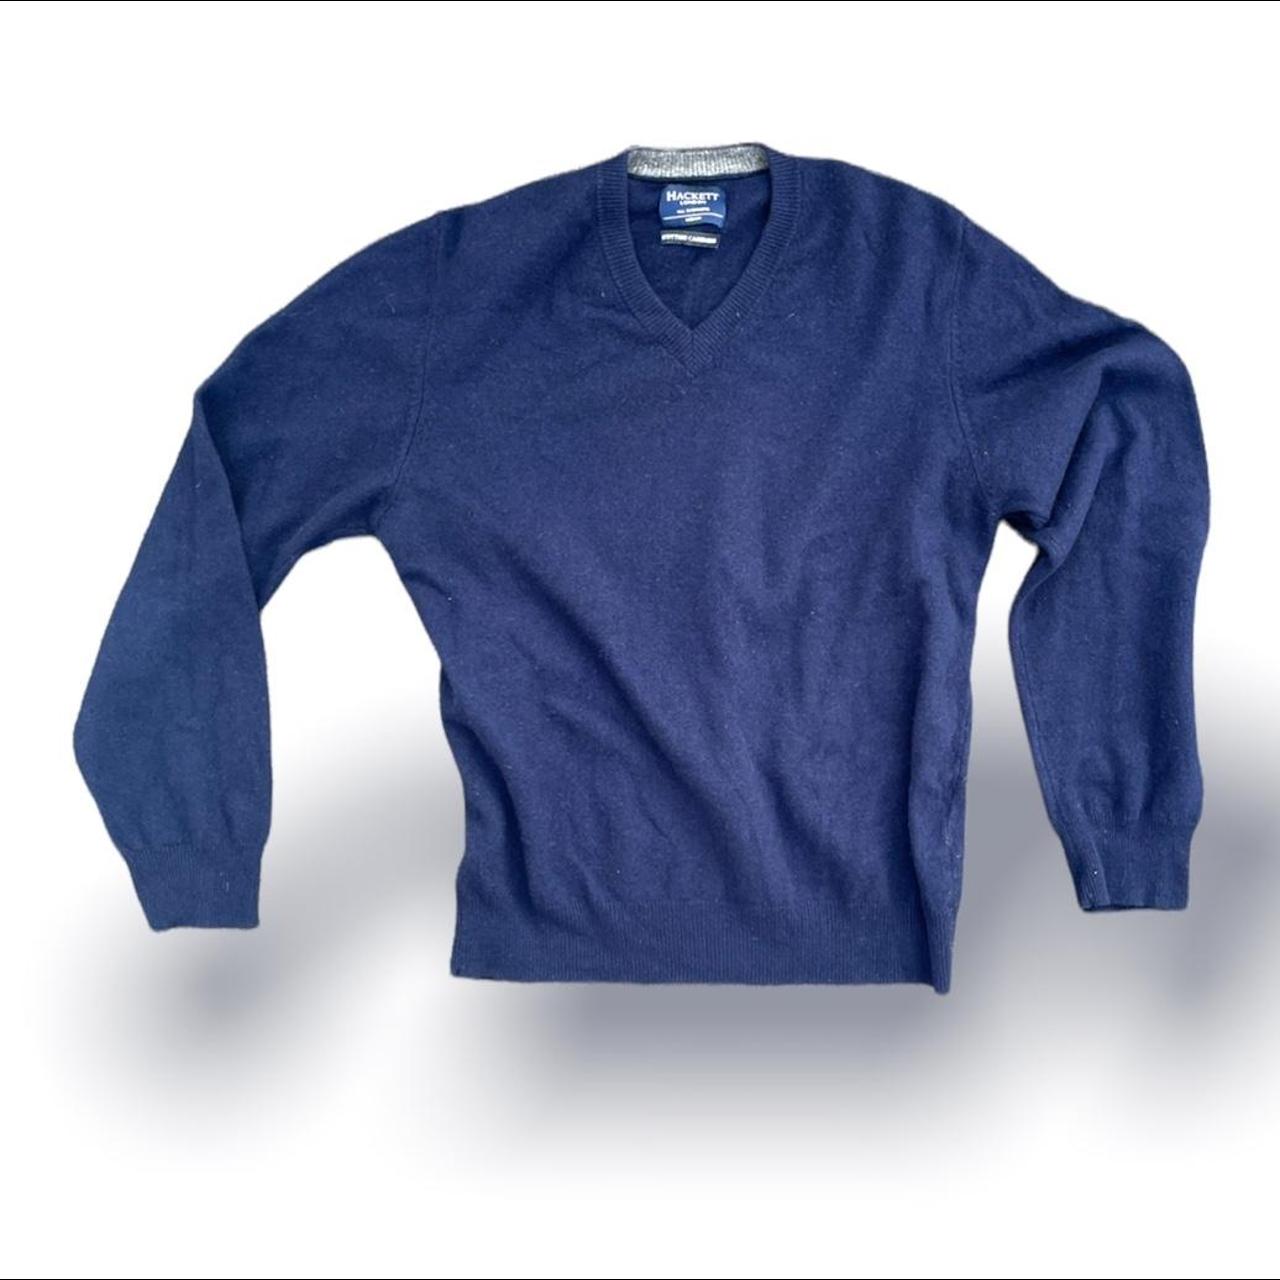 Product Image 1 - V-neck cashmere sweater, mens size